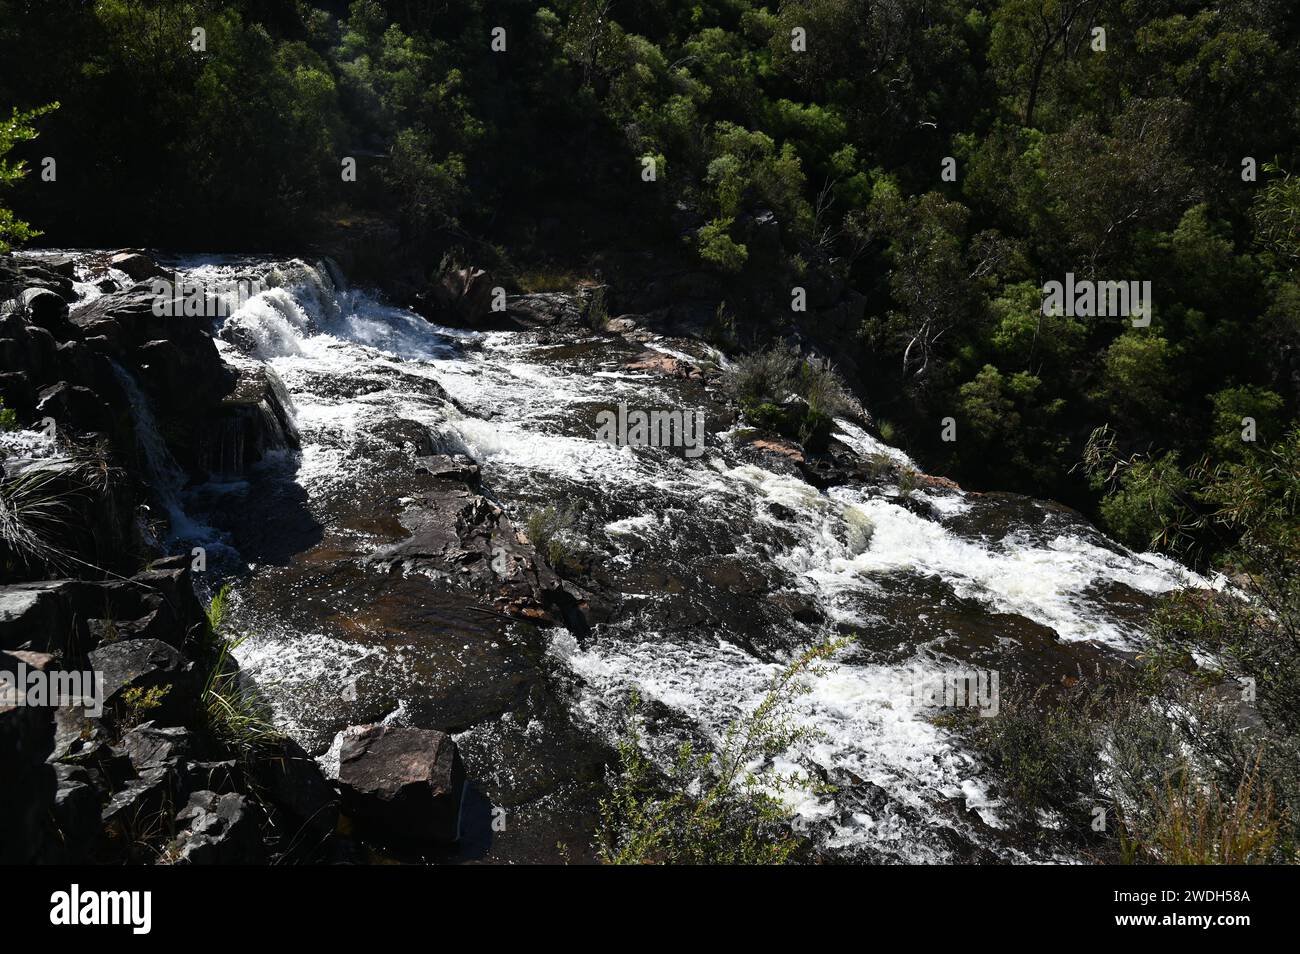 MacKenzie Falls in the Grampians National Park, Australia Stock Photo